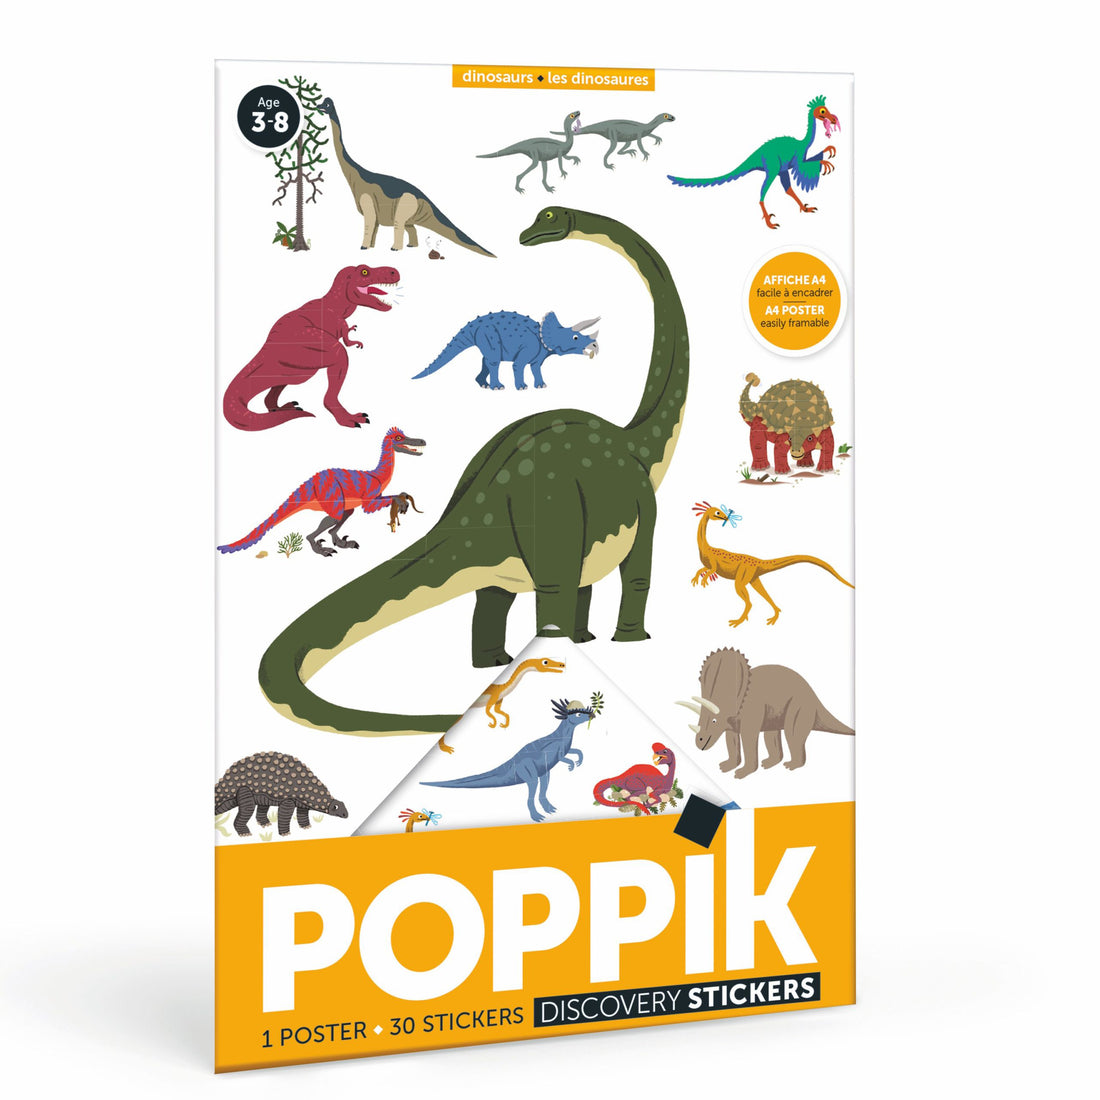 poppik-mini-poster-26-stickers-dinosaurs-3-8-years-old-popk-min003